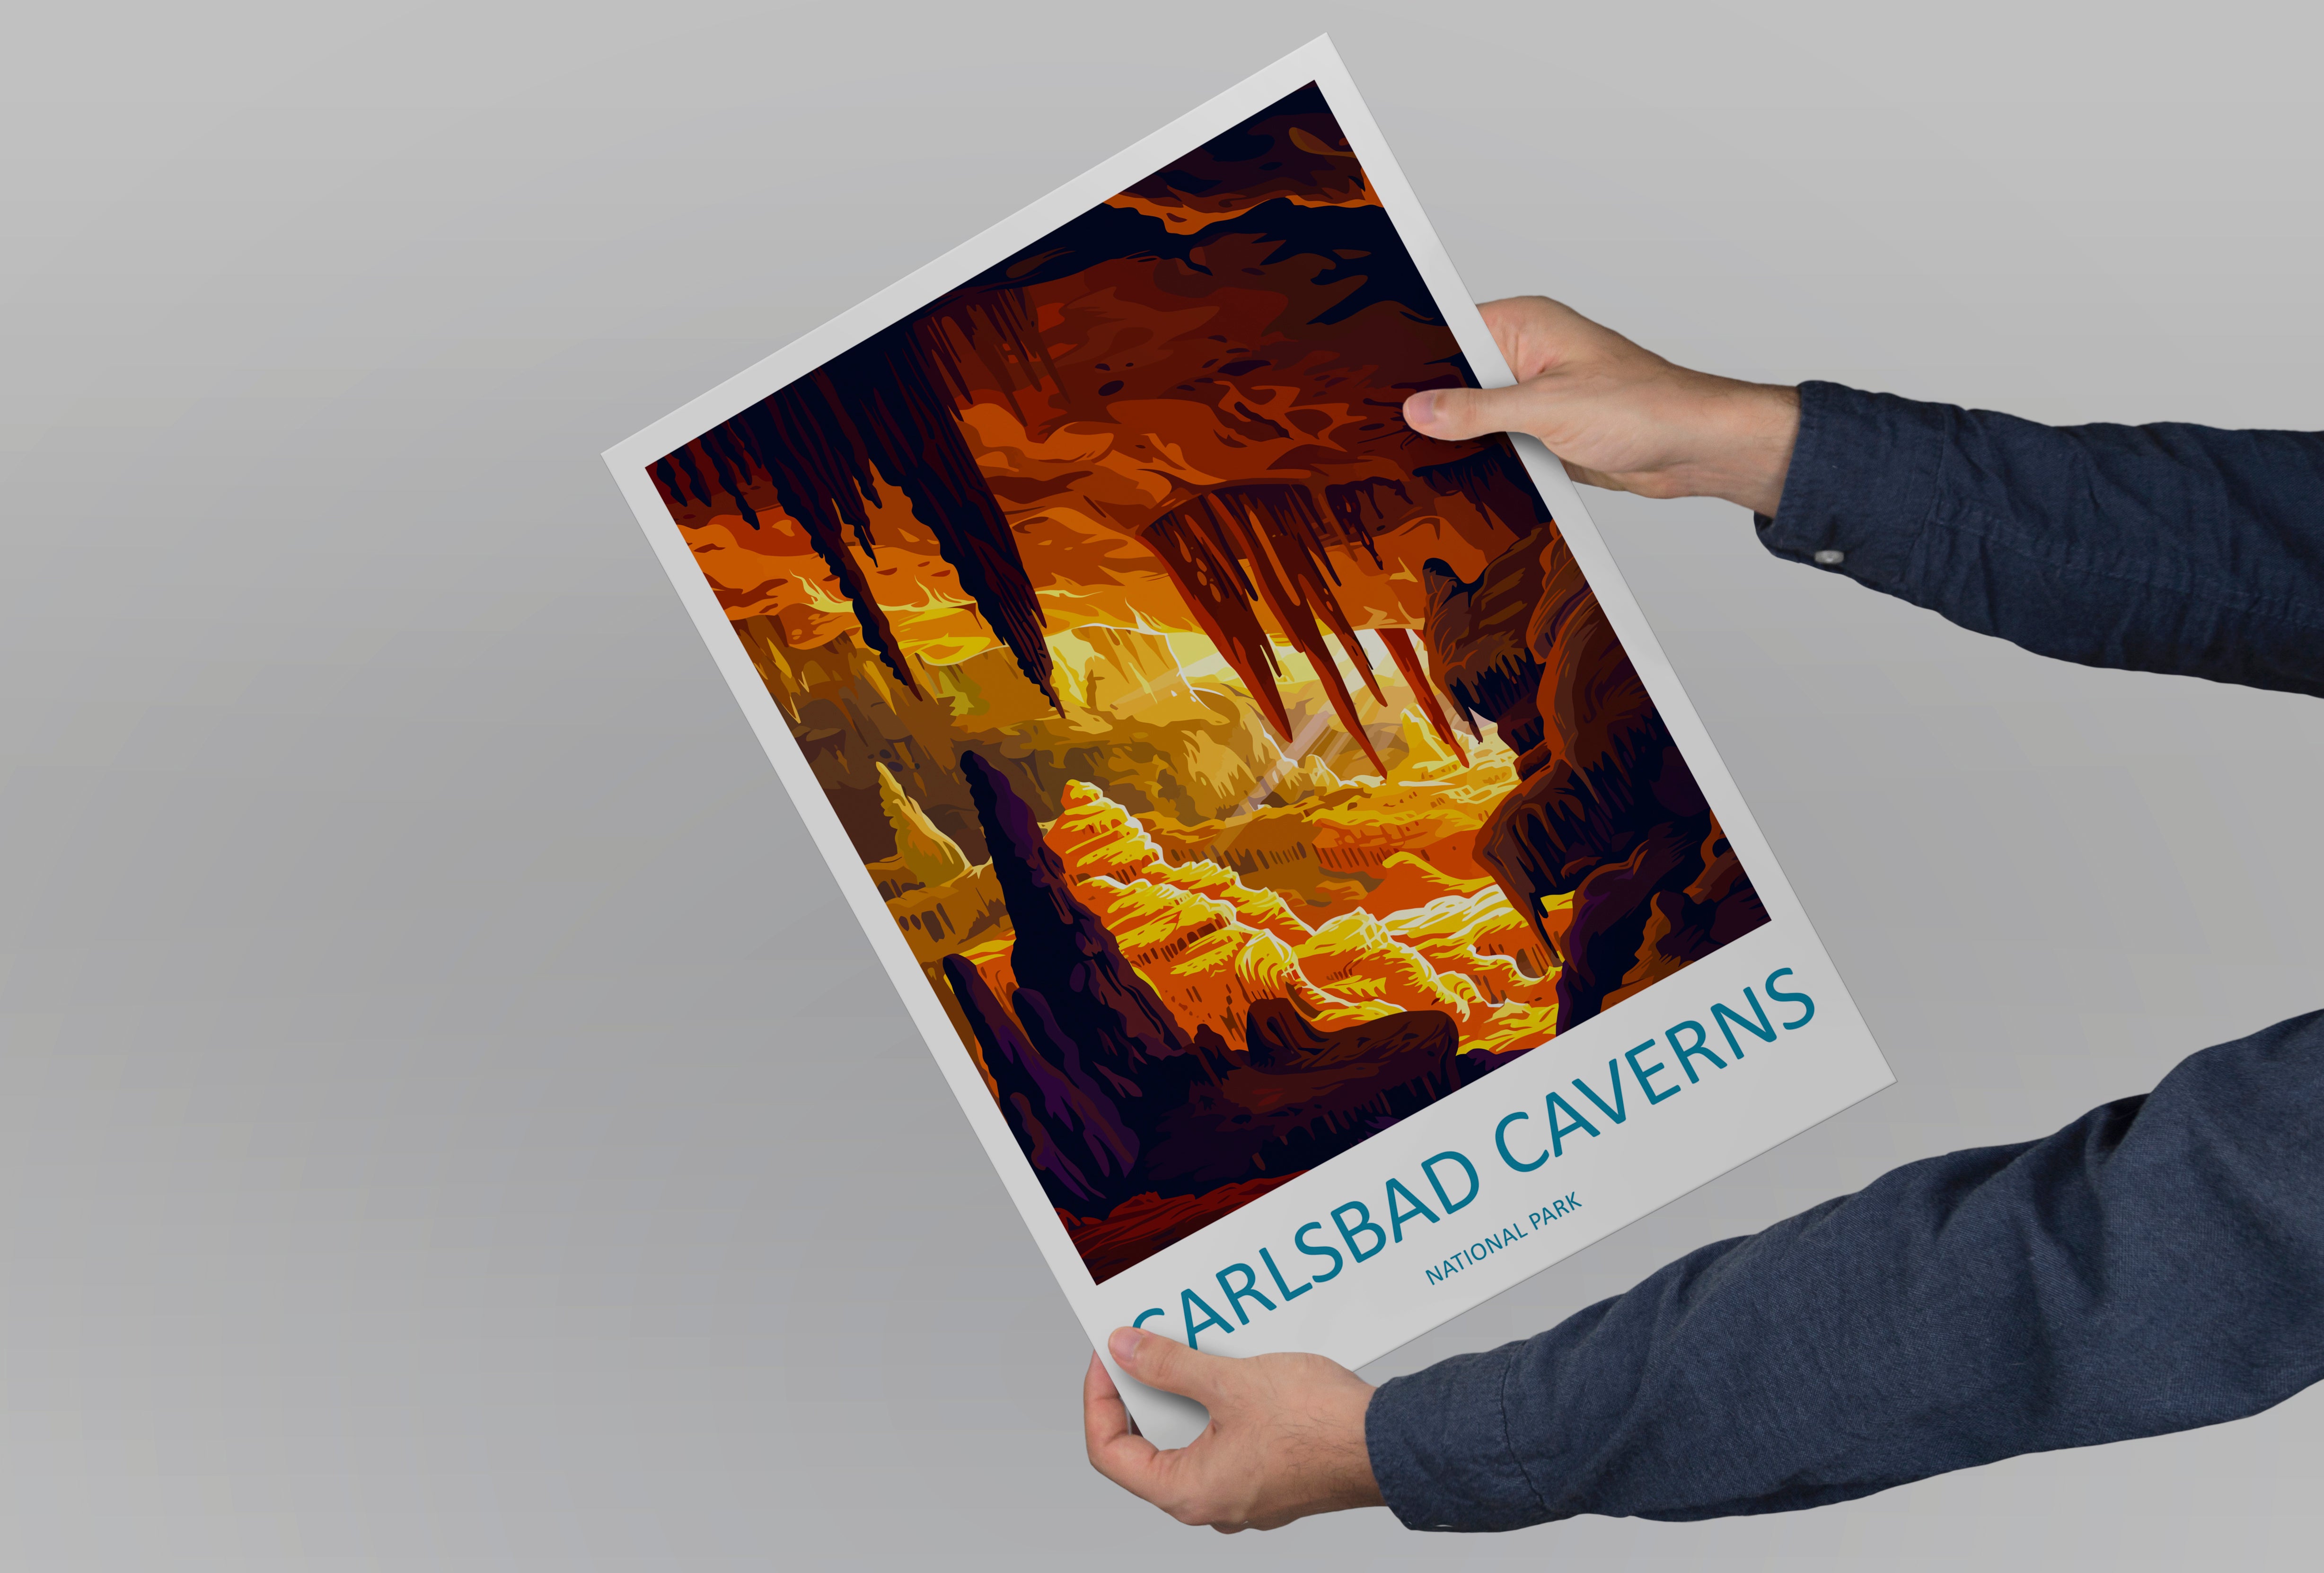 Carlsbad Caverns US National Park Travel Print